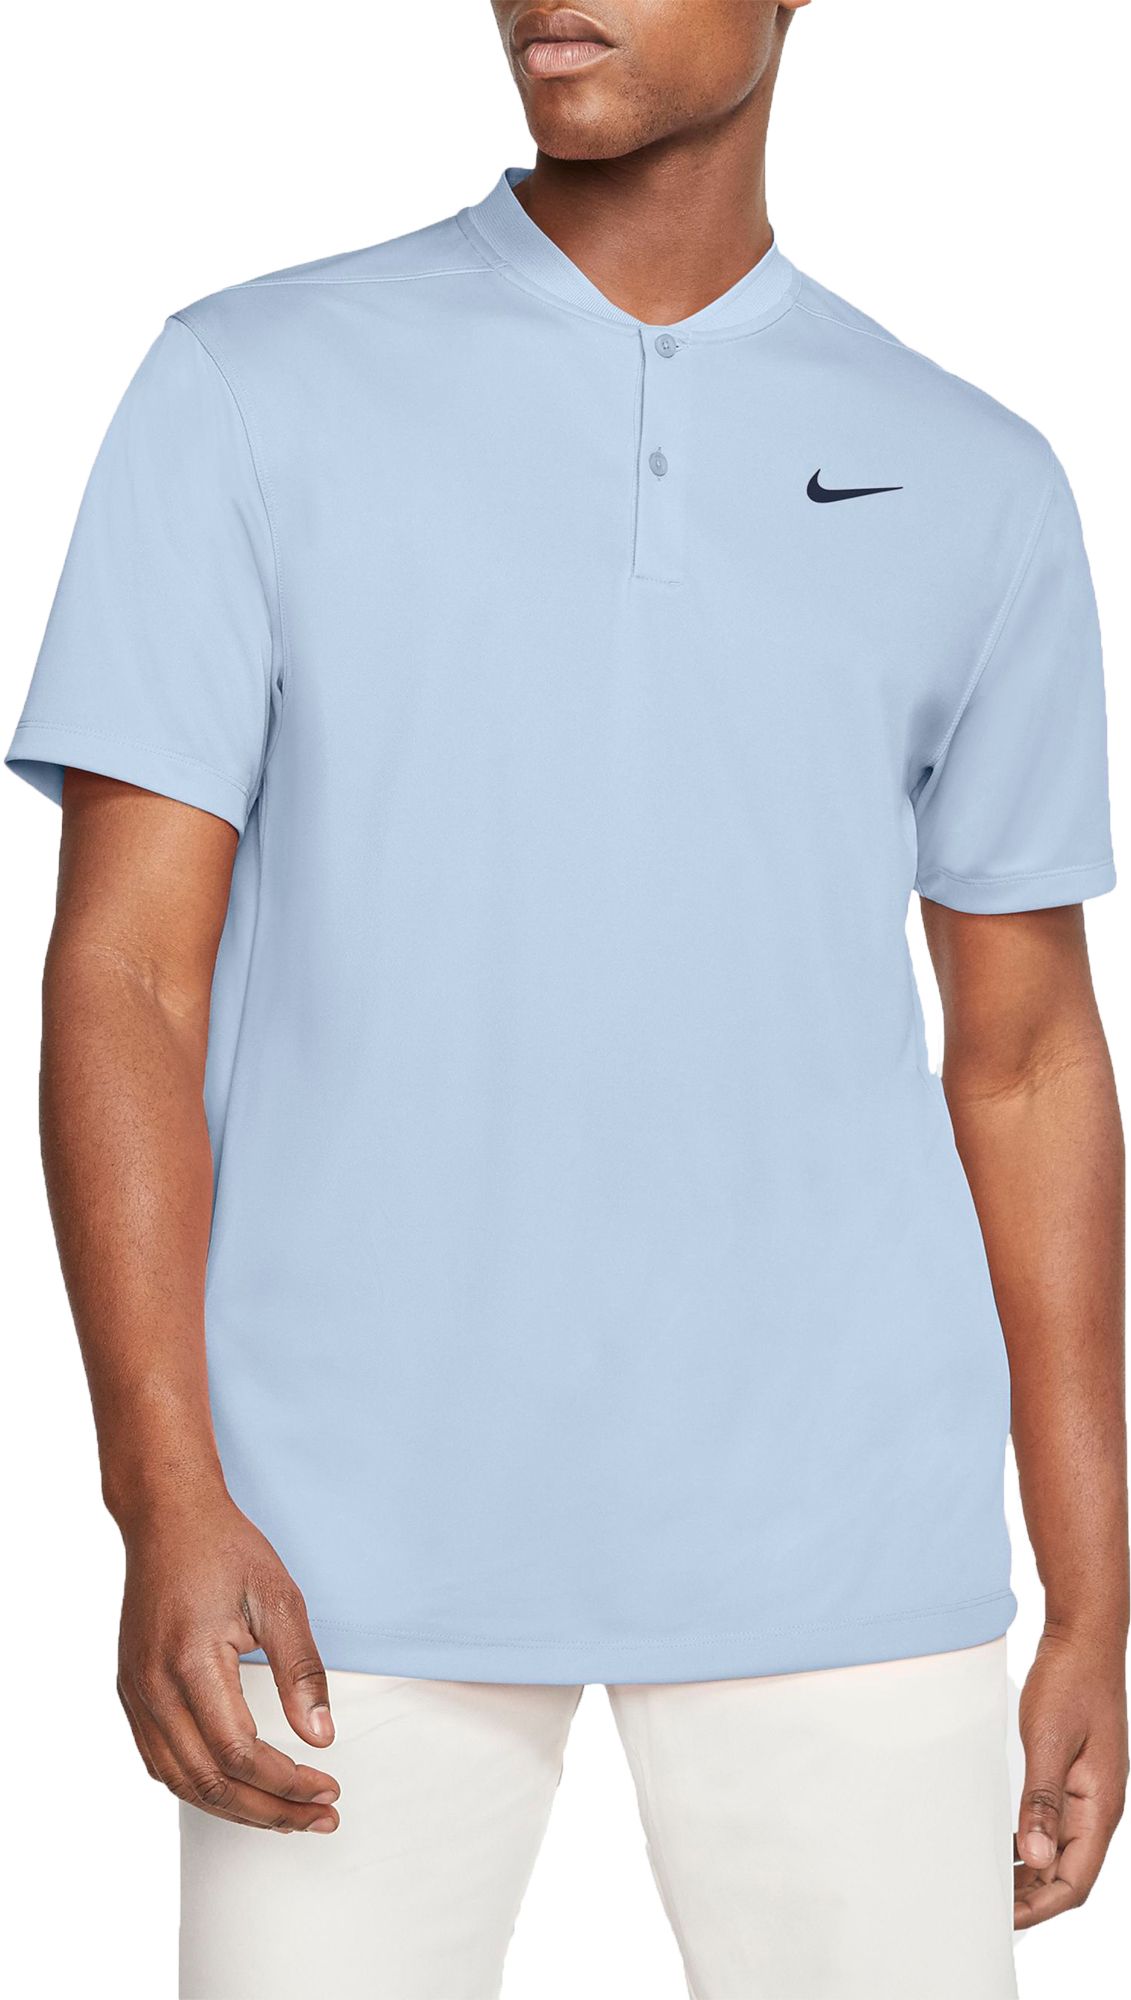 nike golf t shirt price